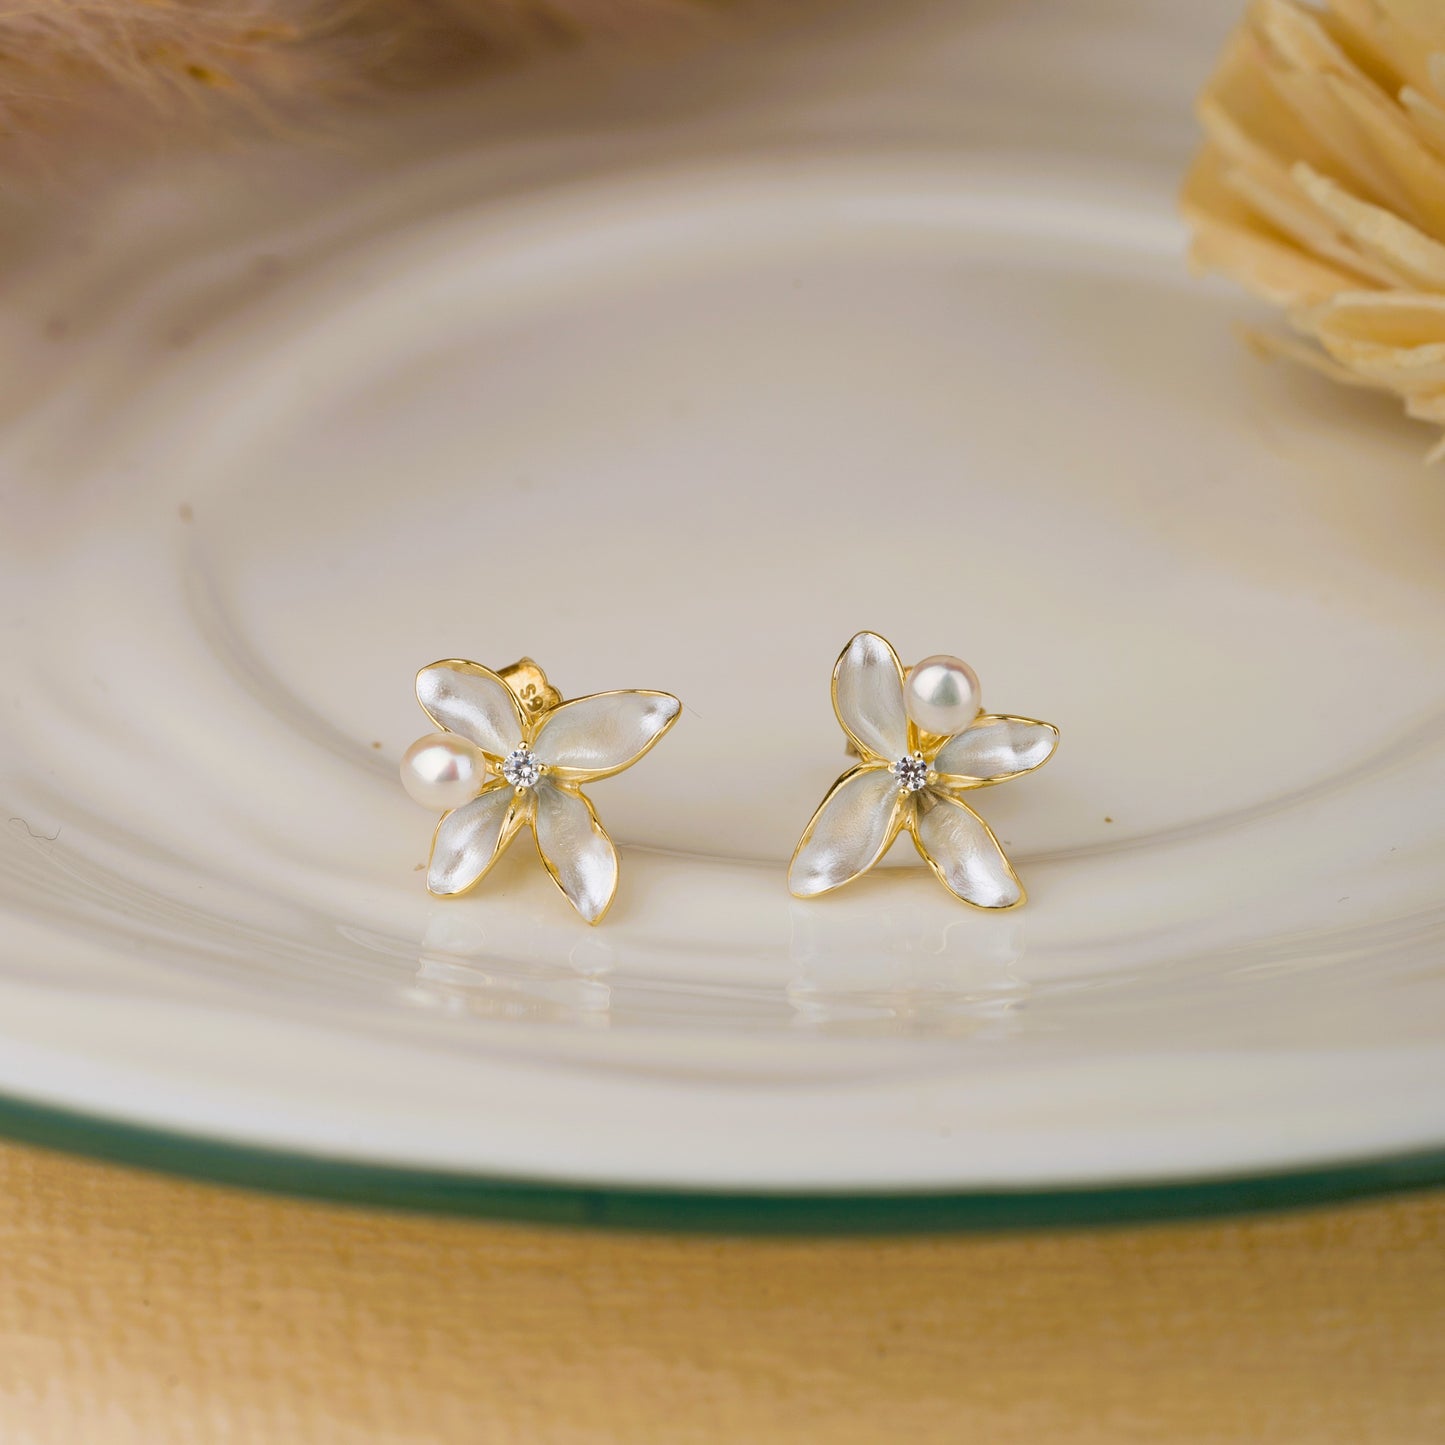 Buy White Earrings for Women by GLOBUS Online | Ajio.com